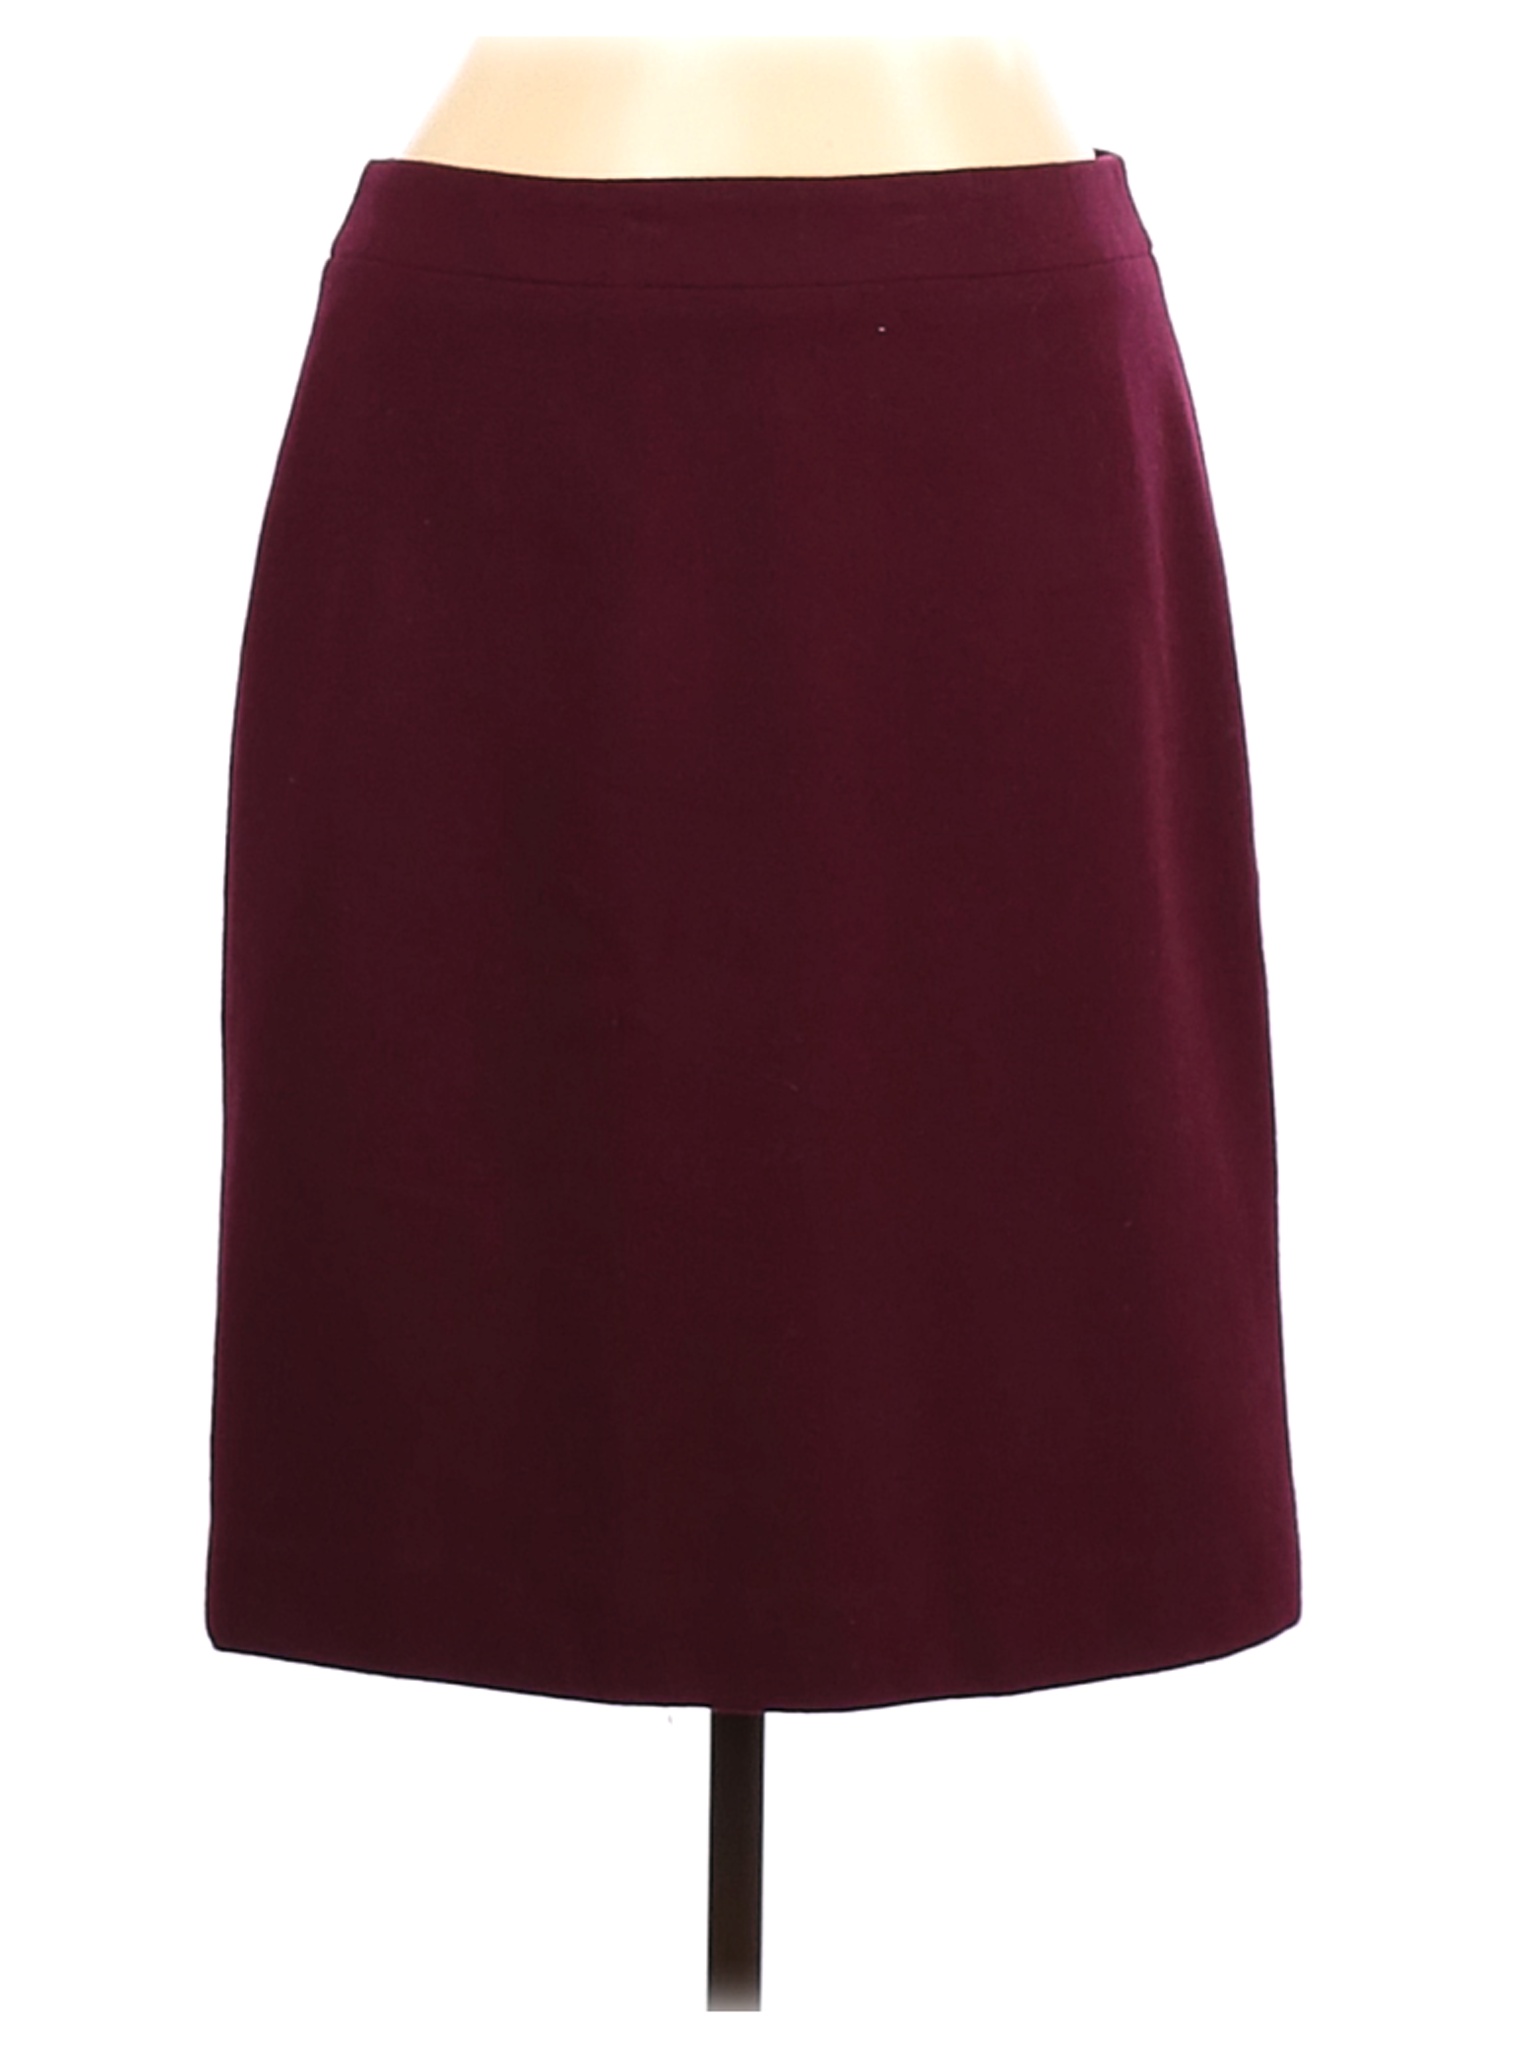 J.Crew Women Red Wool Skirt 10 | eBay